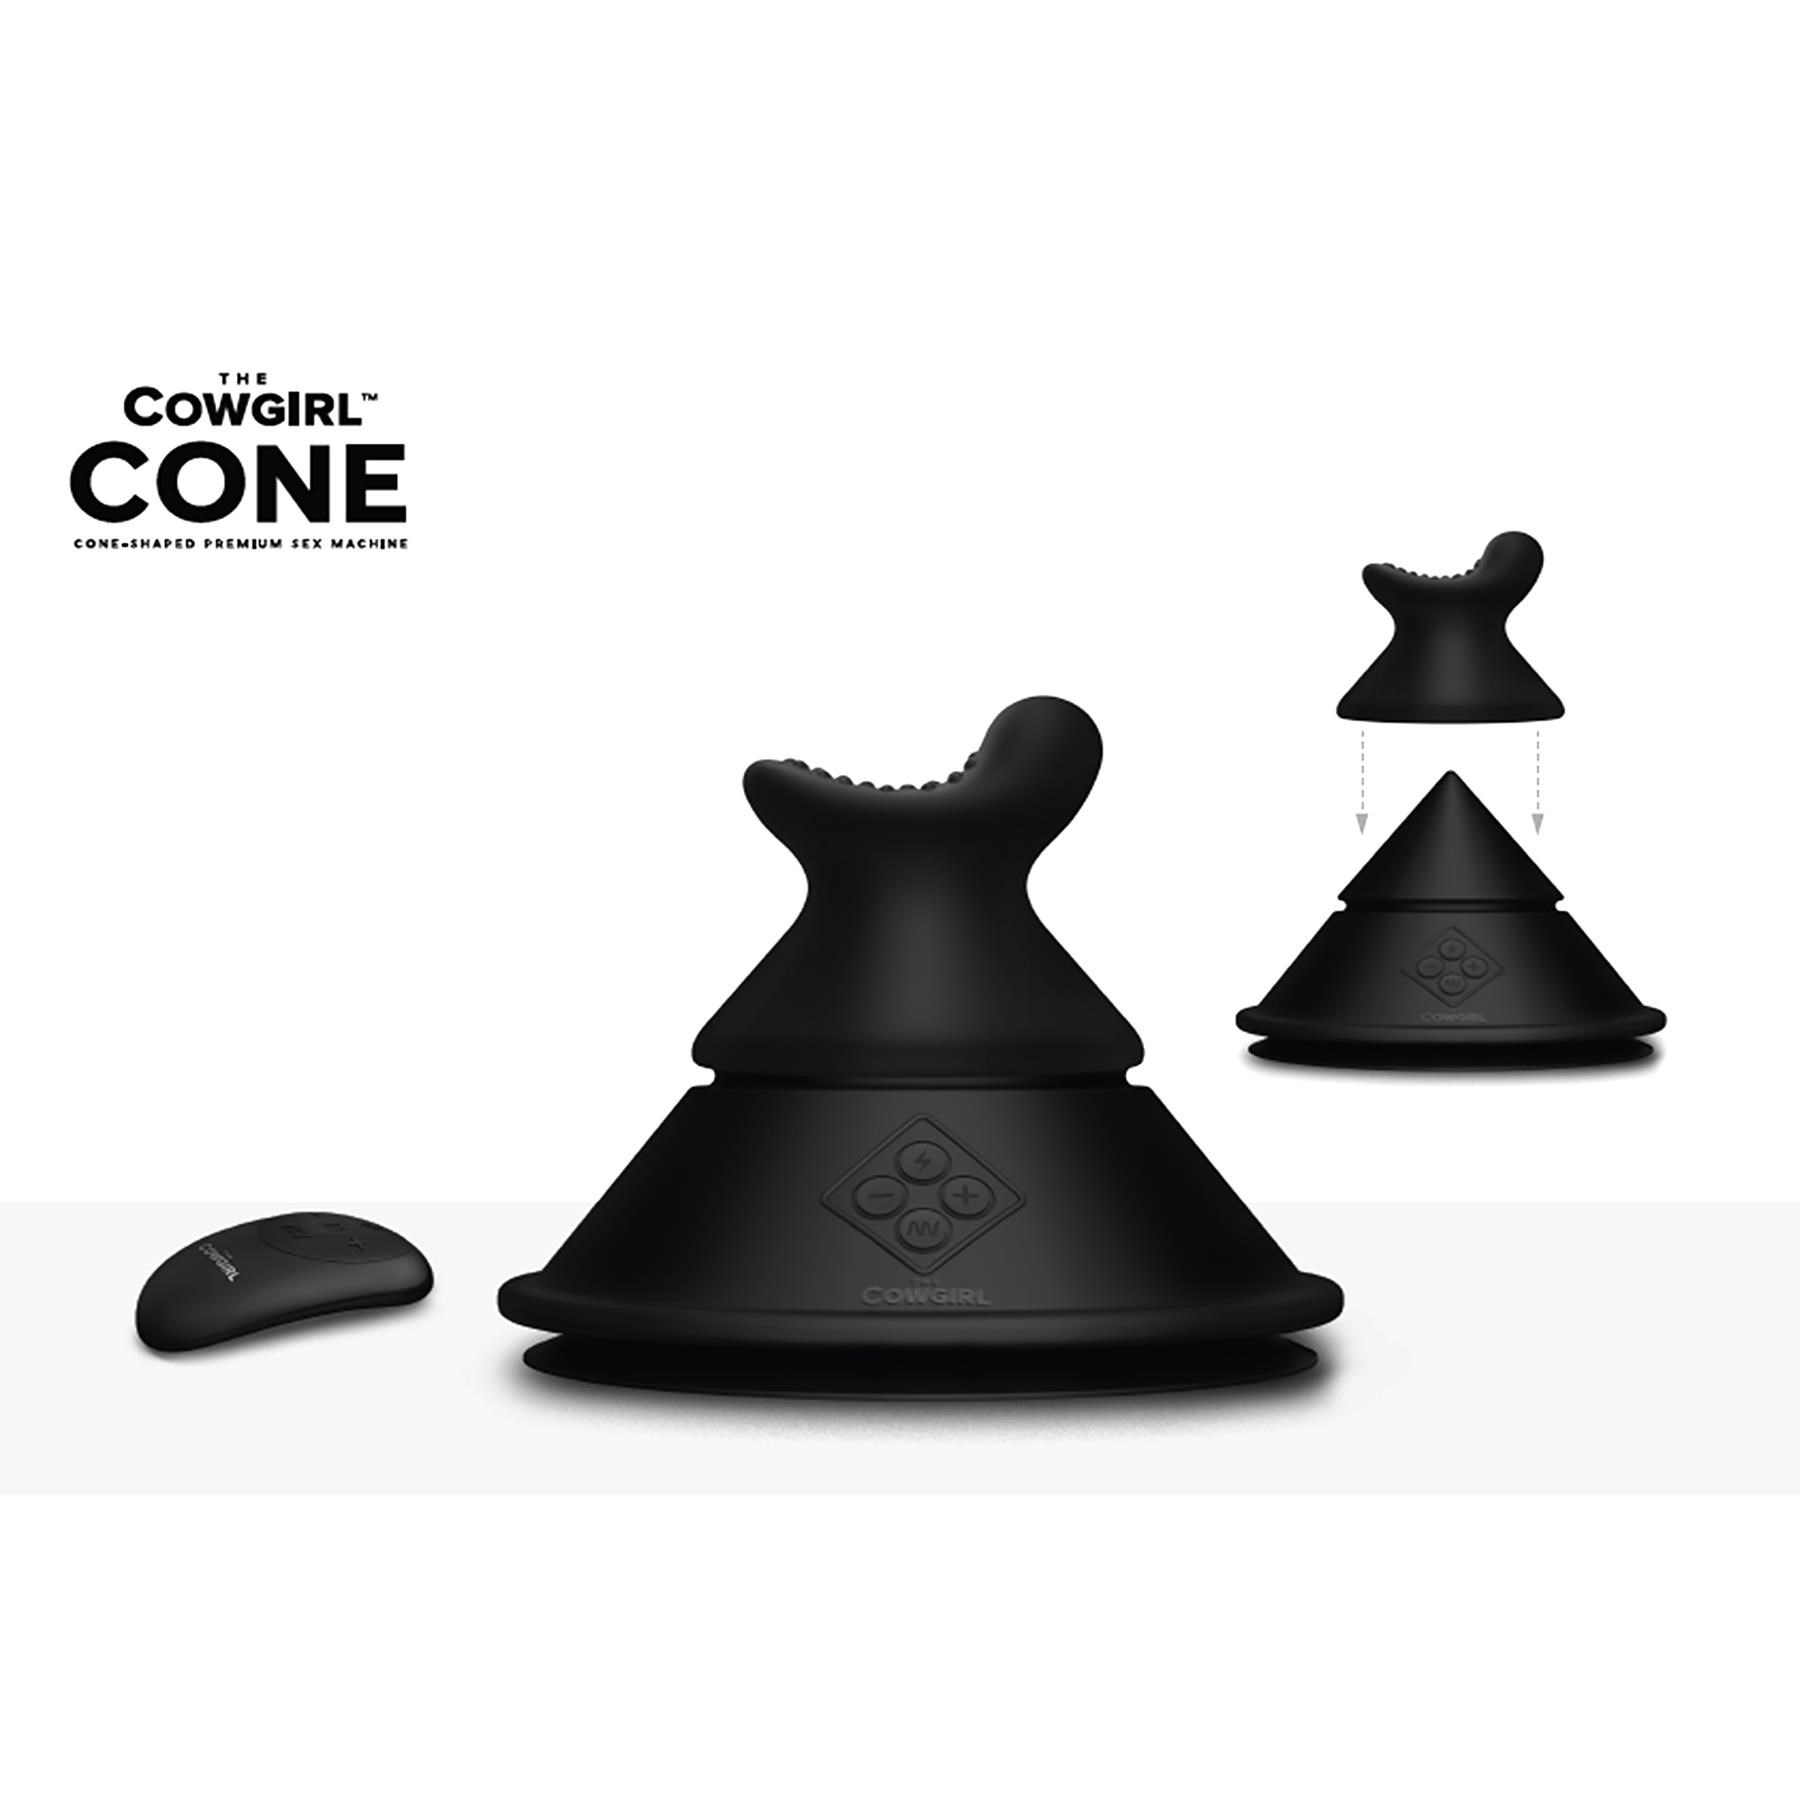 The Cowgirl Cone Sex Machine - All Components